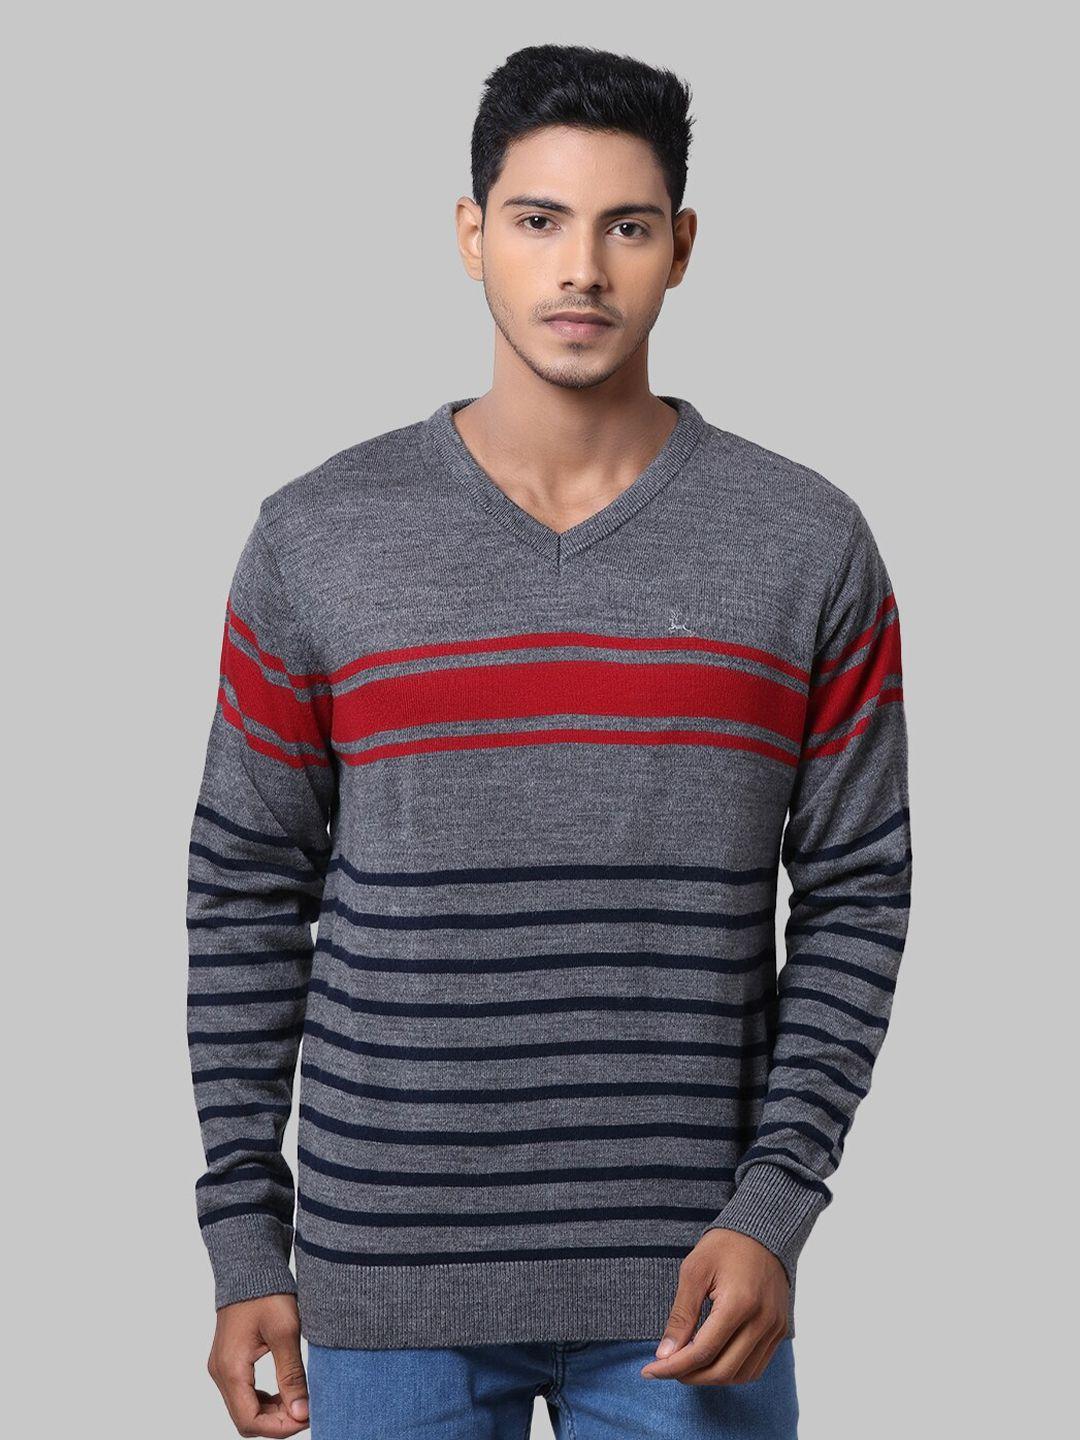 parx-men-grey-&-red-striped-v-neck-acrylic-pullover